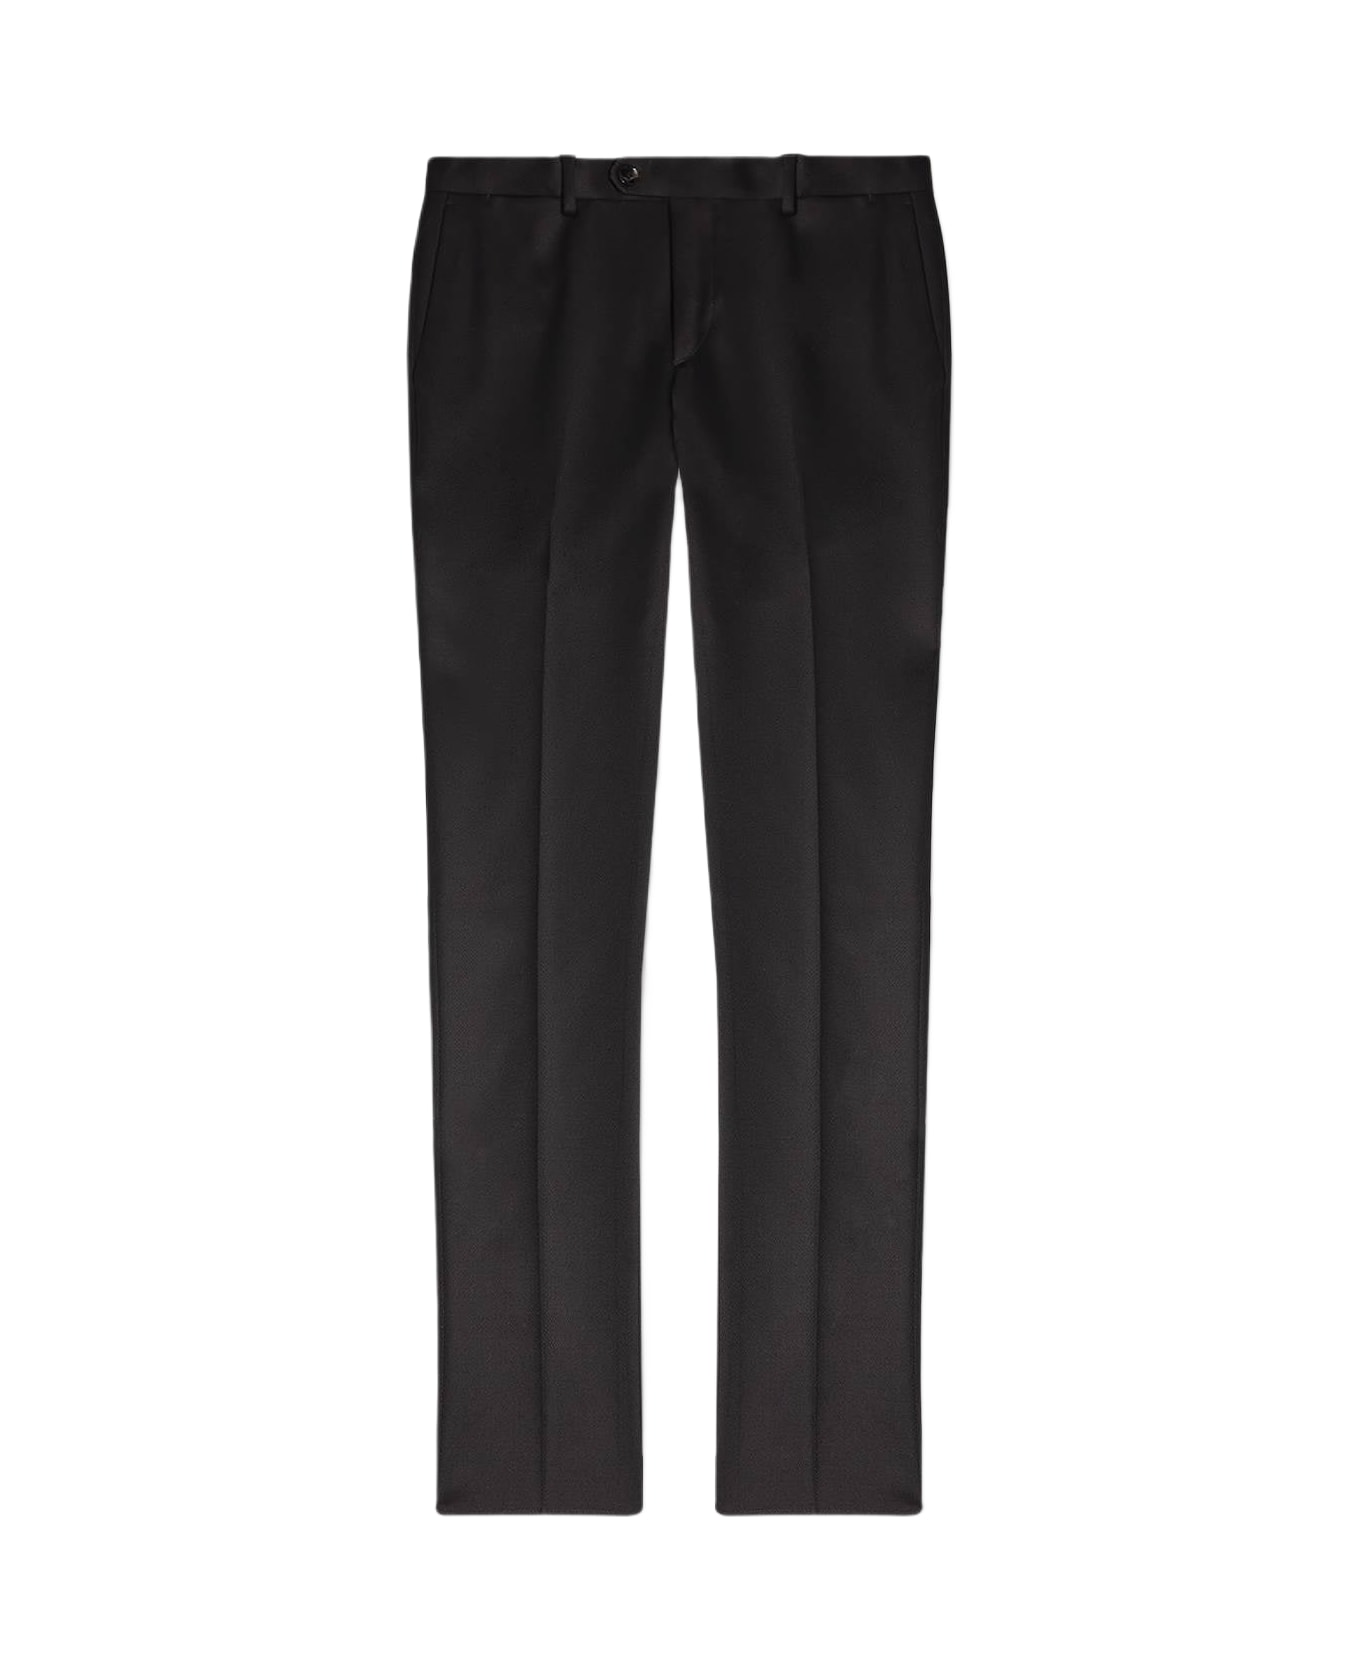 Larusmiani Wool Trousers Milan Pants - Black